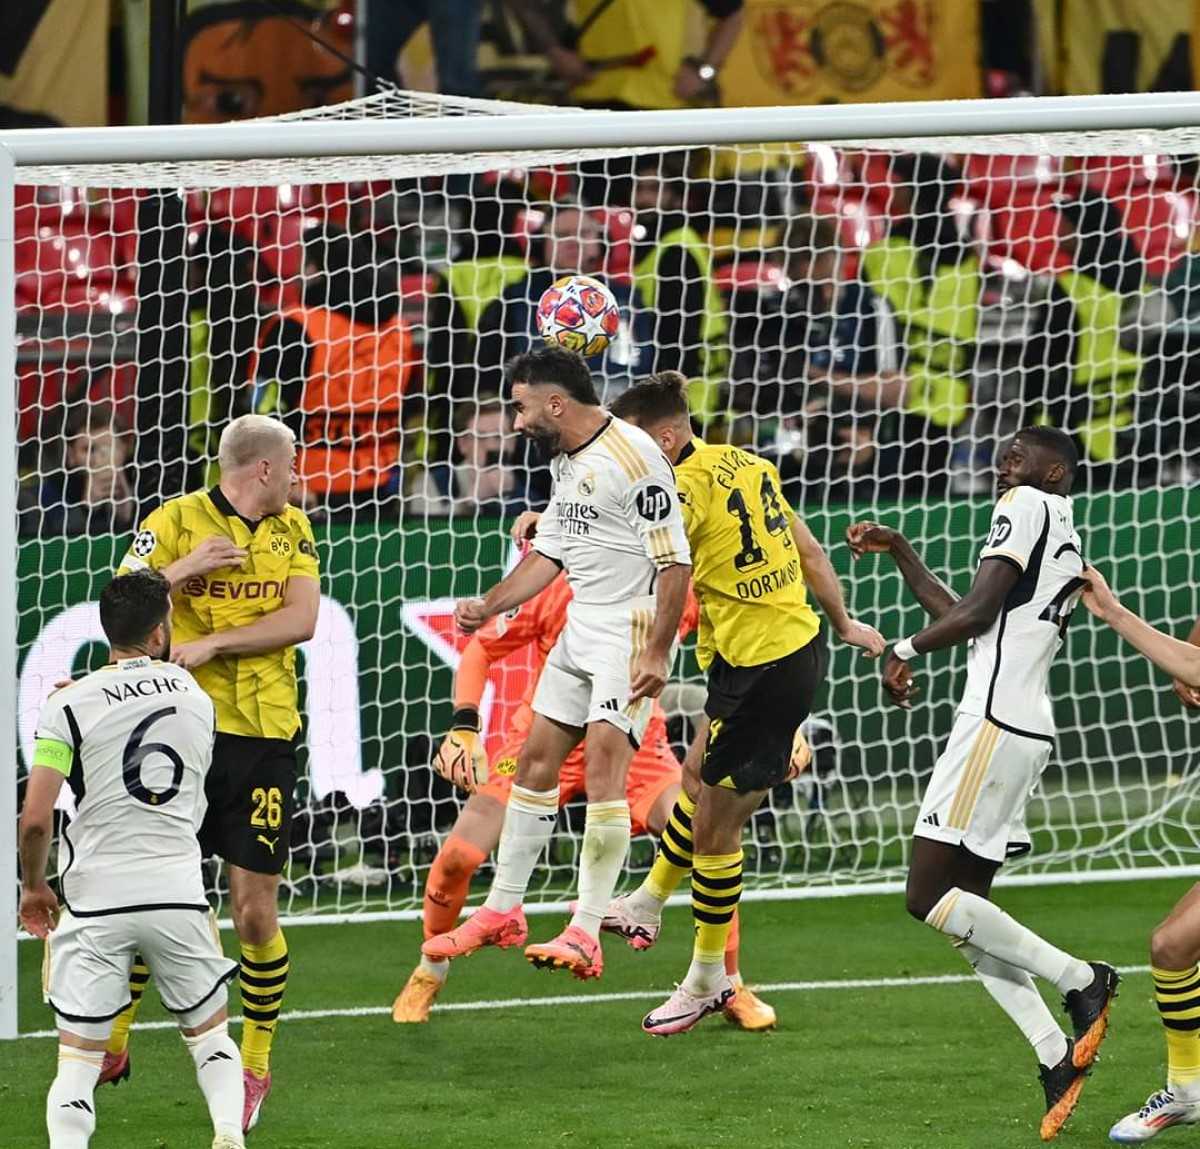 Carvajal Borussia Dortmund-Real Madrid (0-2): analisi tattica e considerazioni